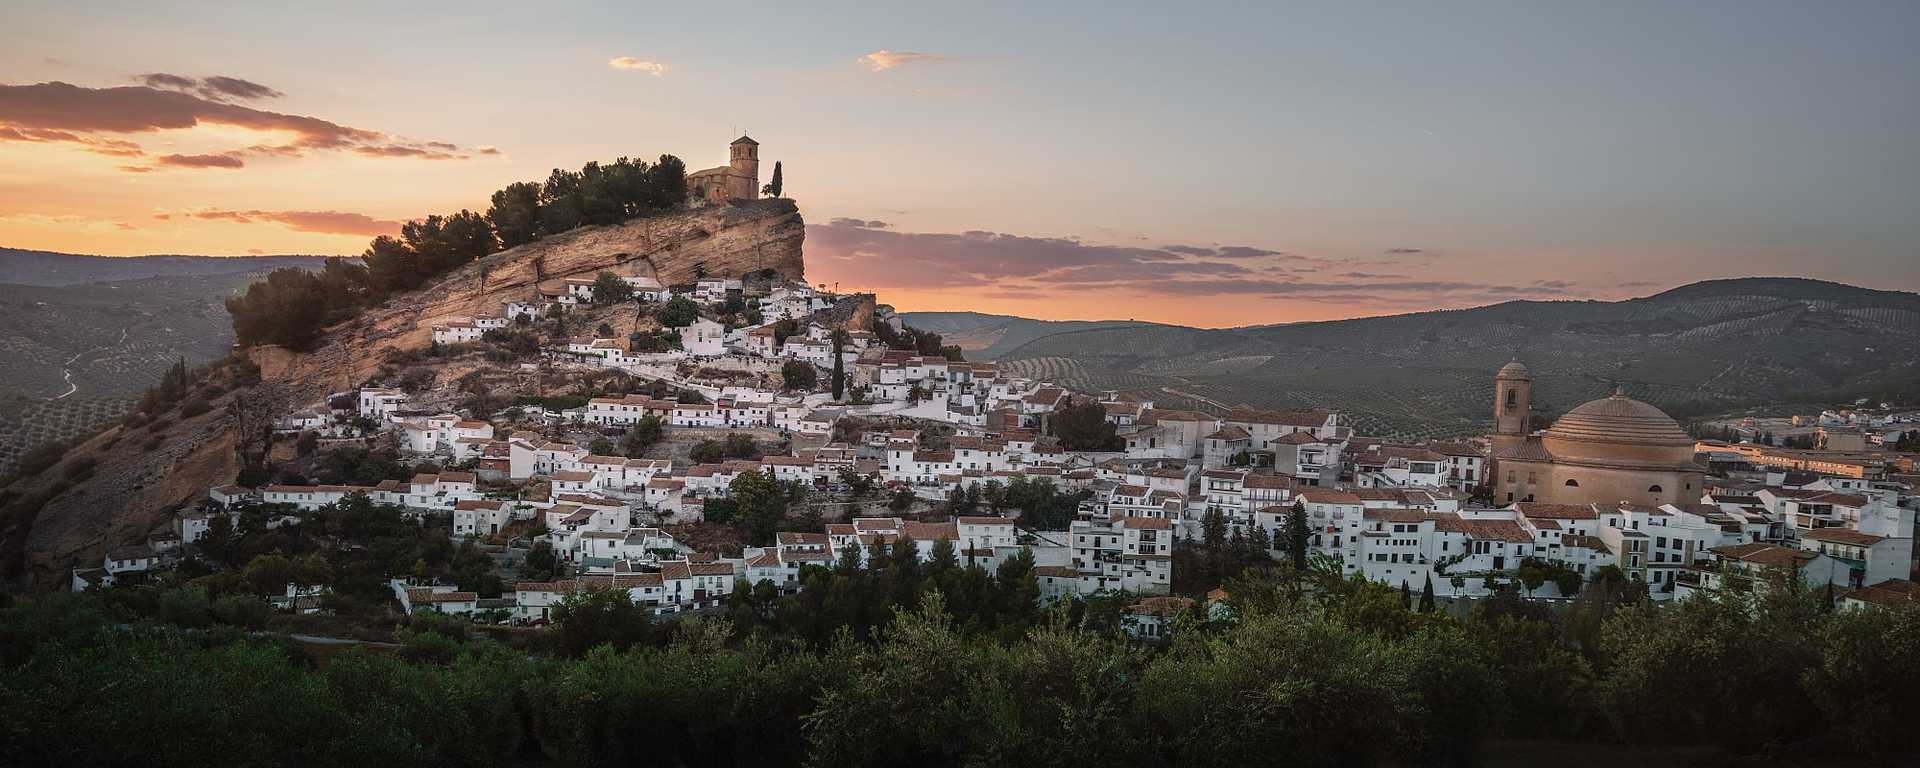 Montefri in the Province of Granada, Spain